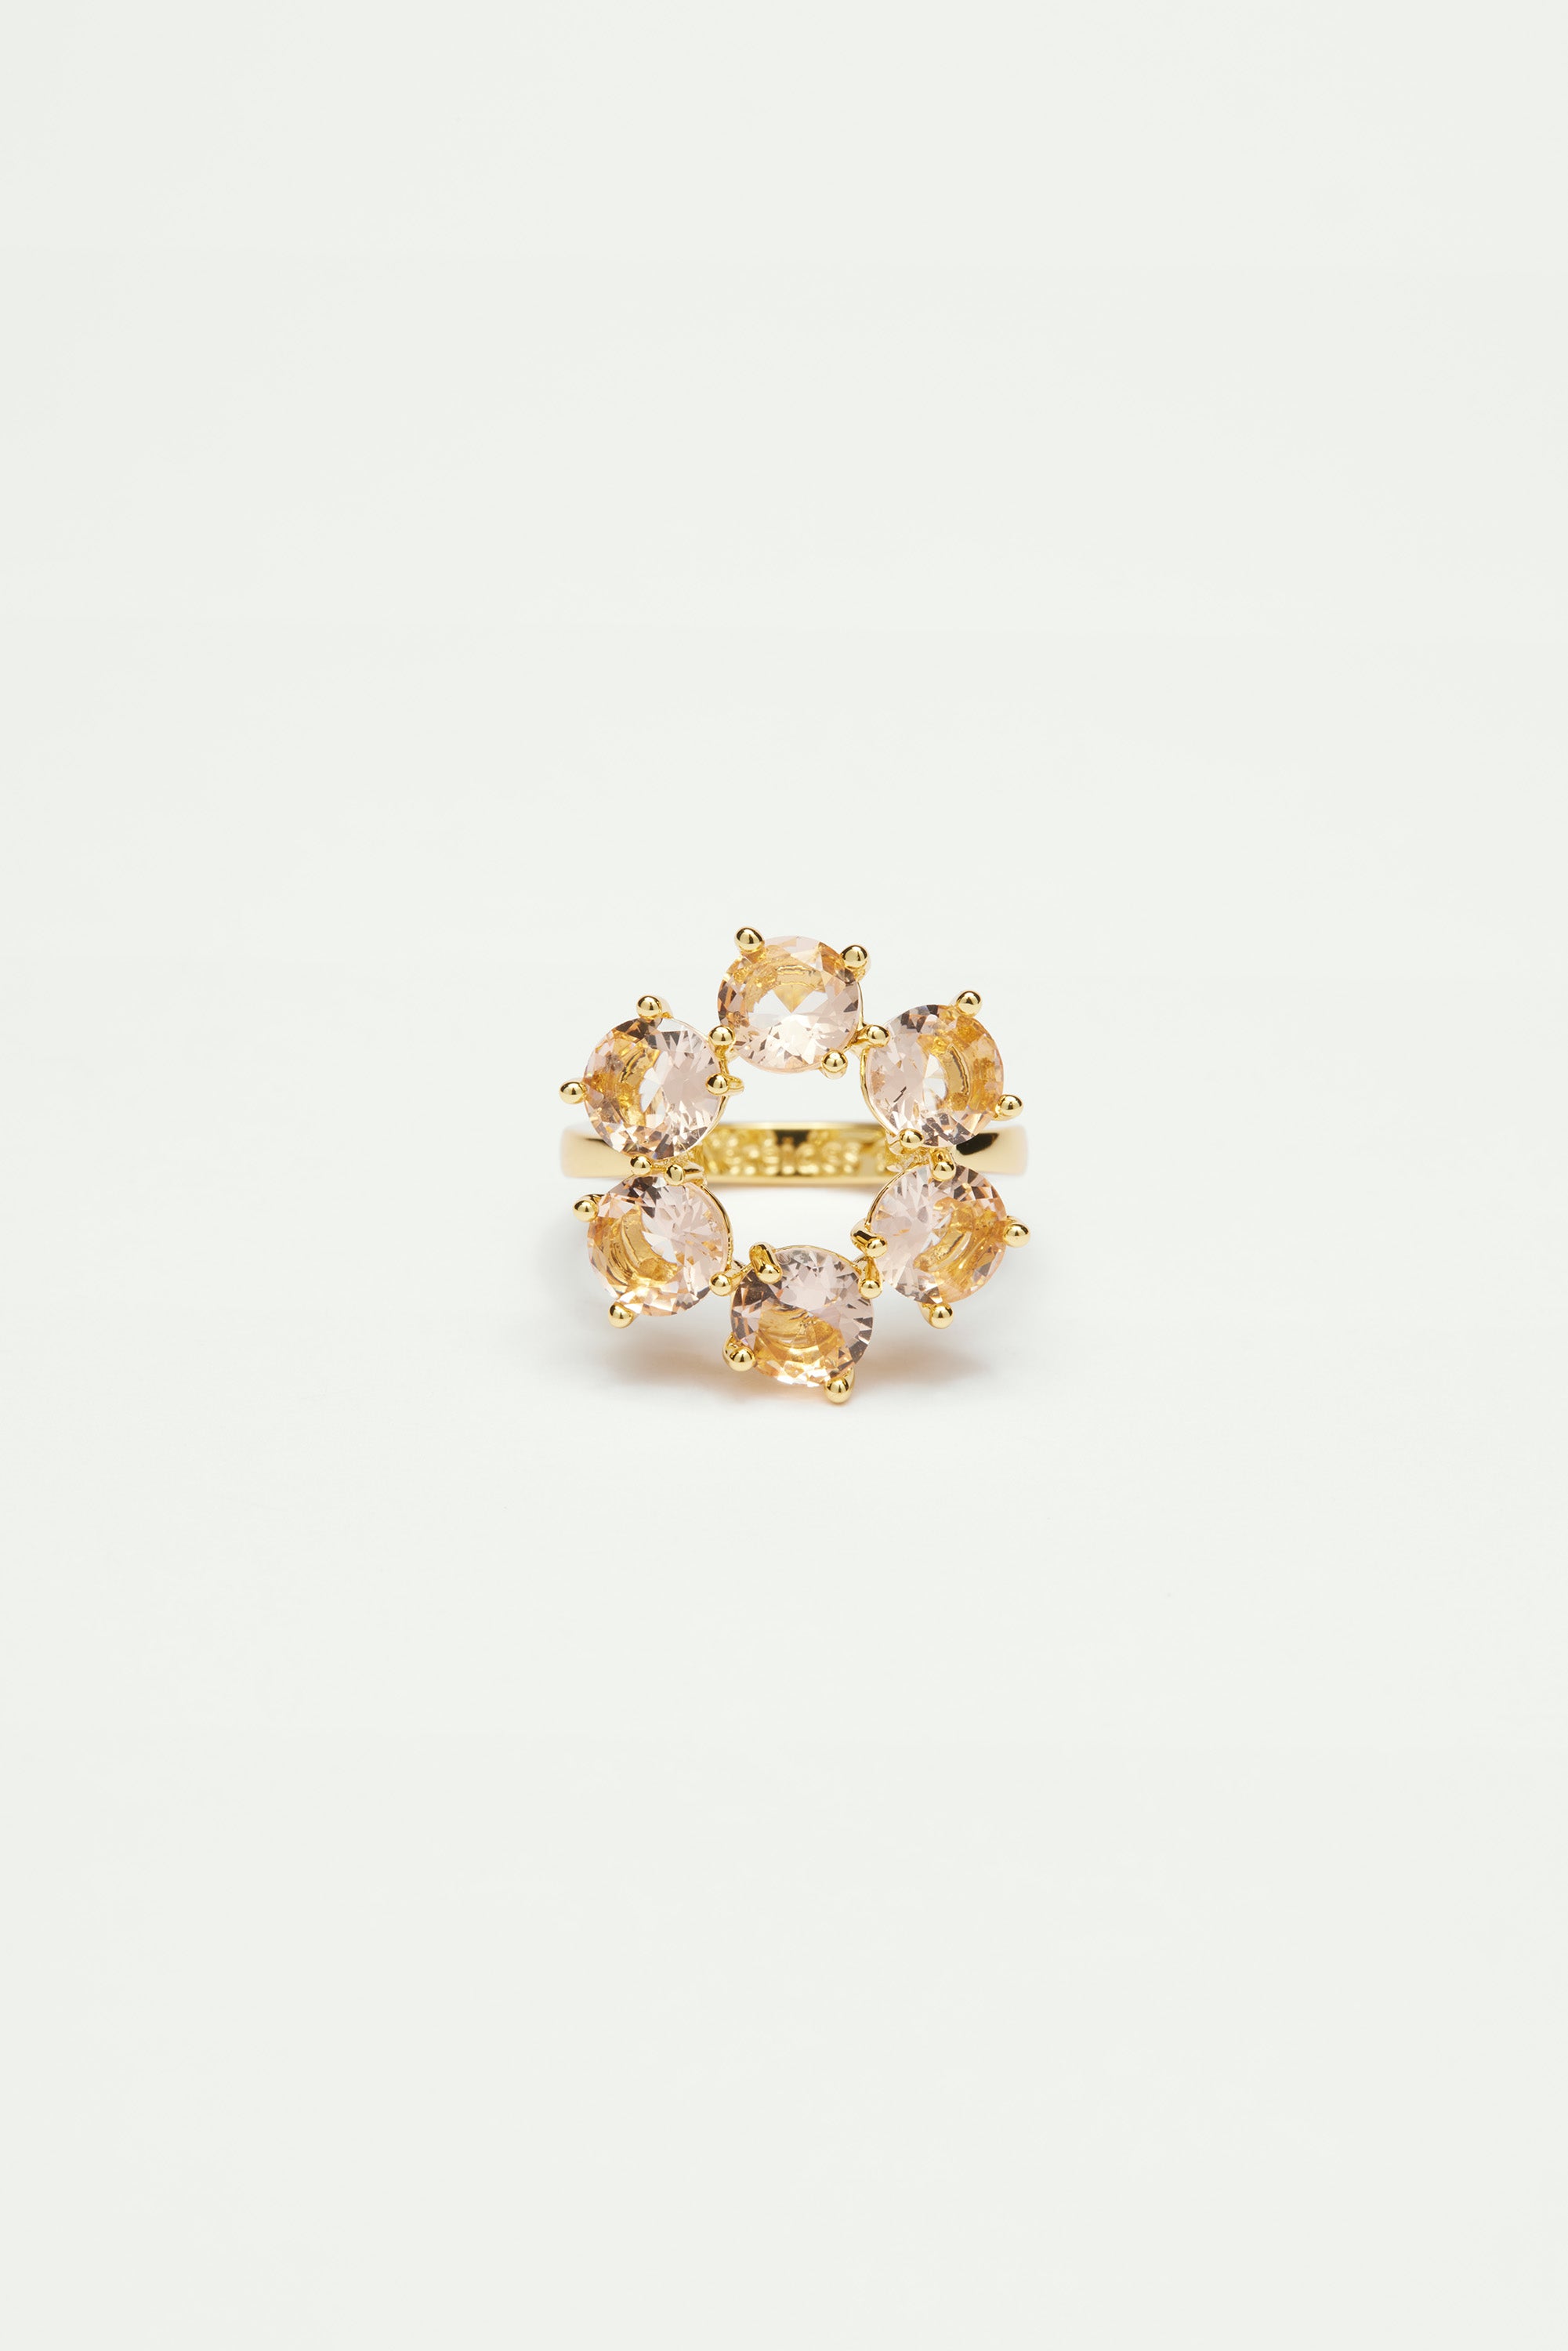 Apricot pink diamantine 6 stone fine ring